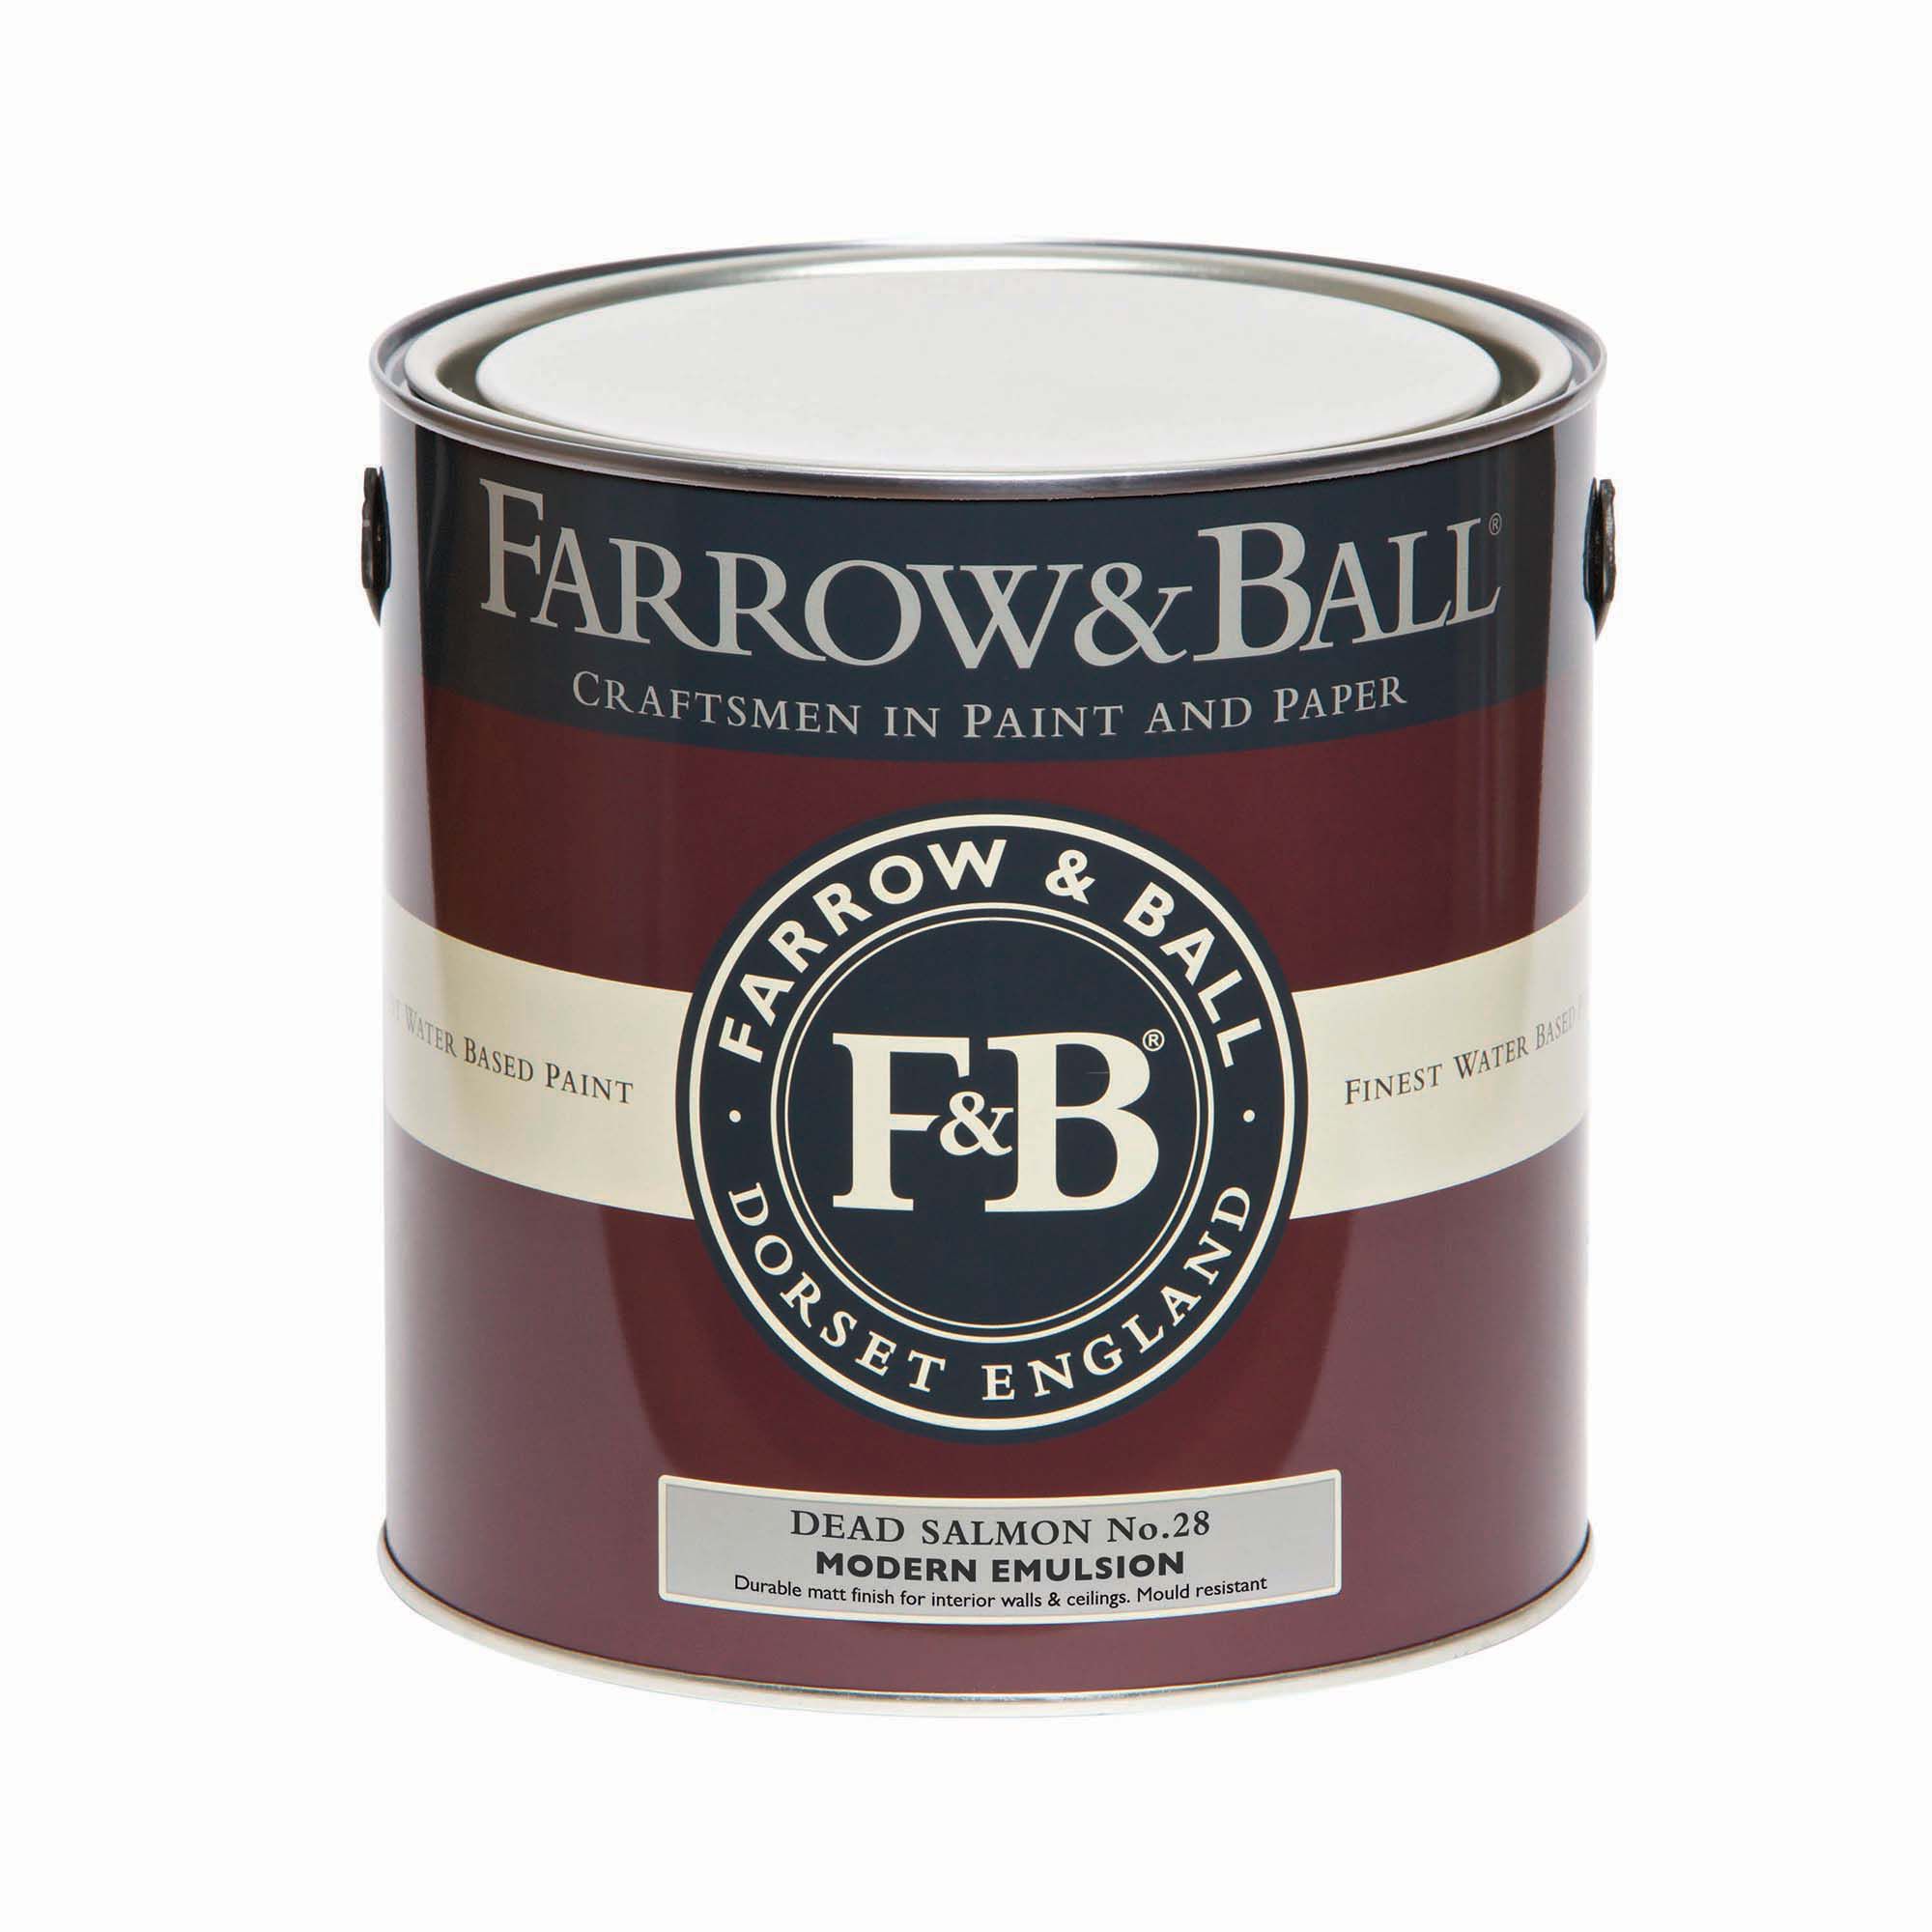 Farrow & Ball Modern Dead Salmon No.28 Matt Emulsion paint, 2.5L